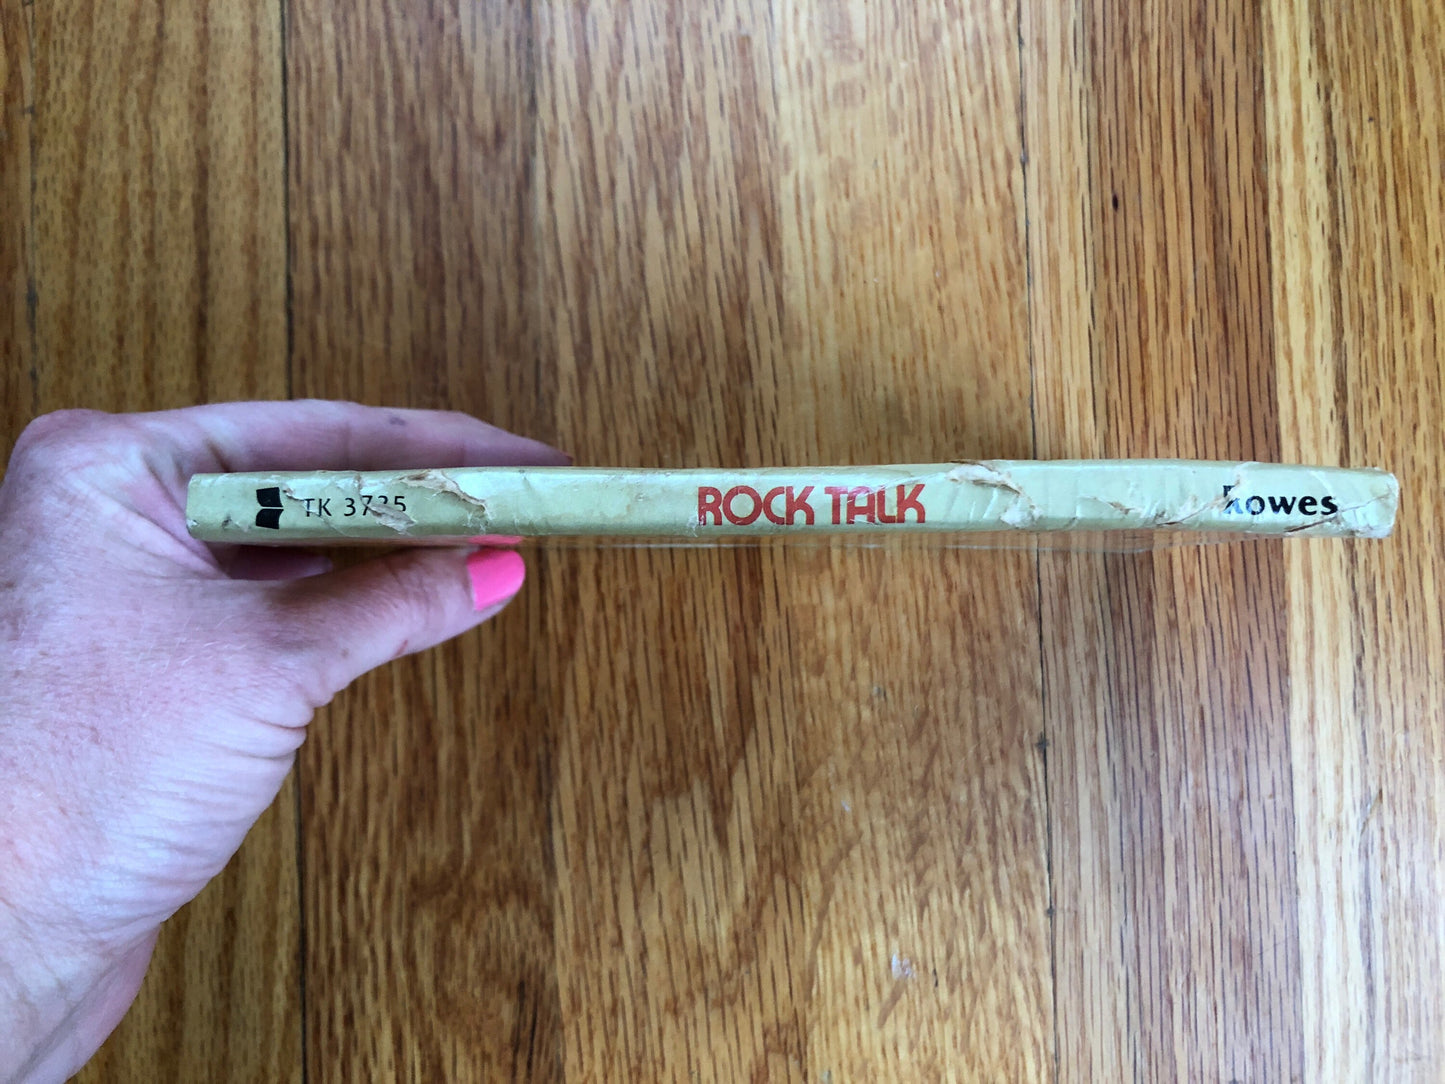 Rock Talk | Barbara Rowes | 1977 Rock n Roll Book | Scholastic Books TK3725 | Elton John | War | Chicago | 1970’s Rock and Roll Books